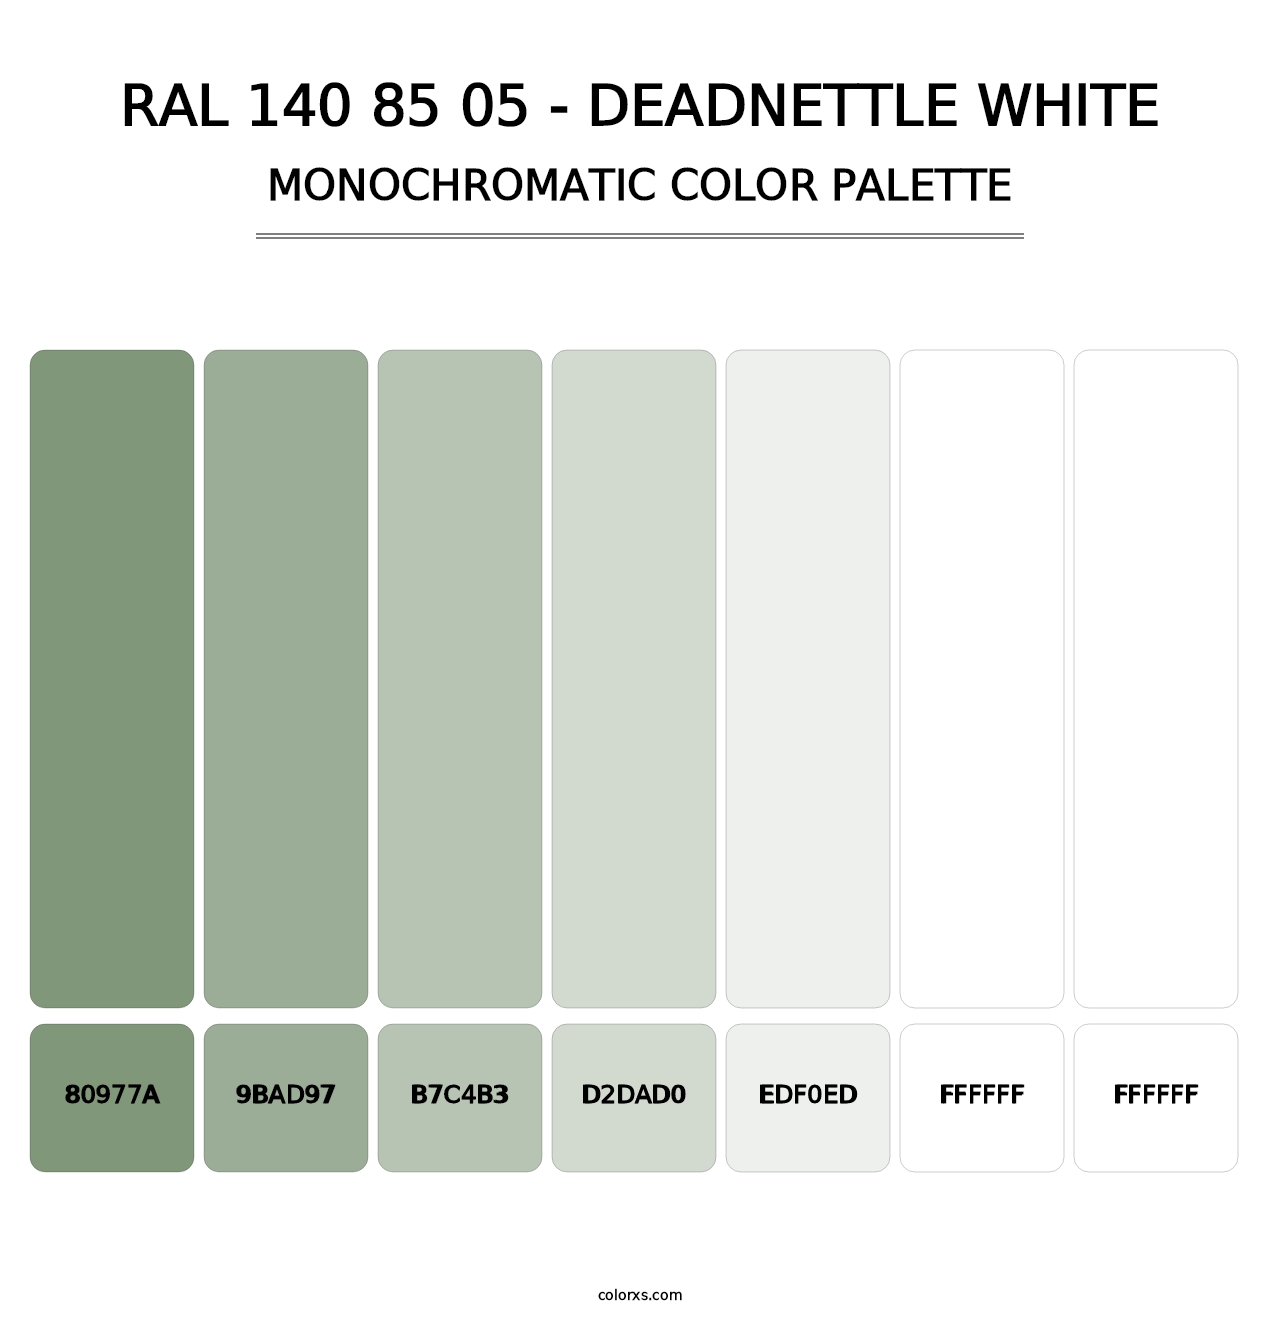 RAL 140 85 05 - Deadnettle White - Monochromatic Color Palette